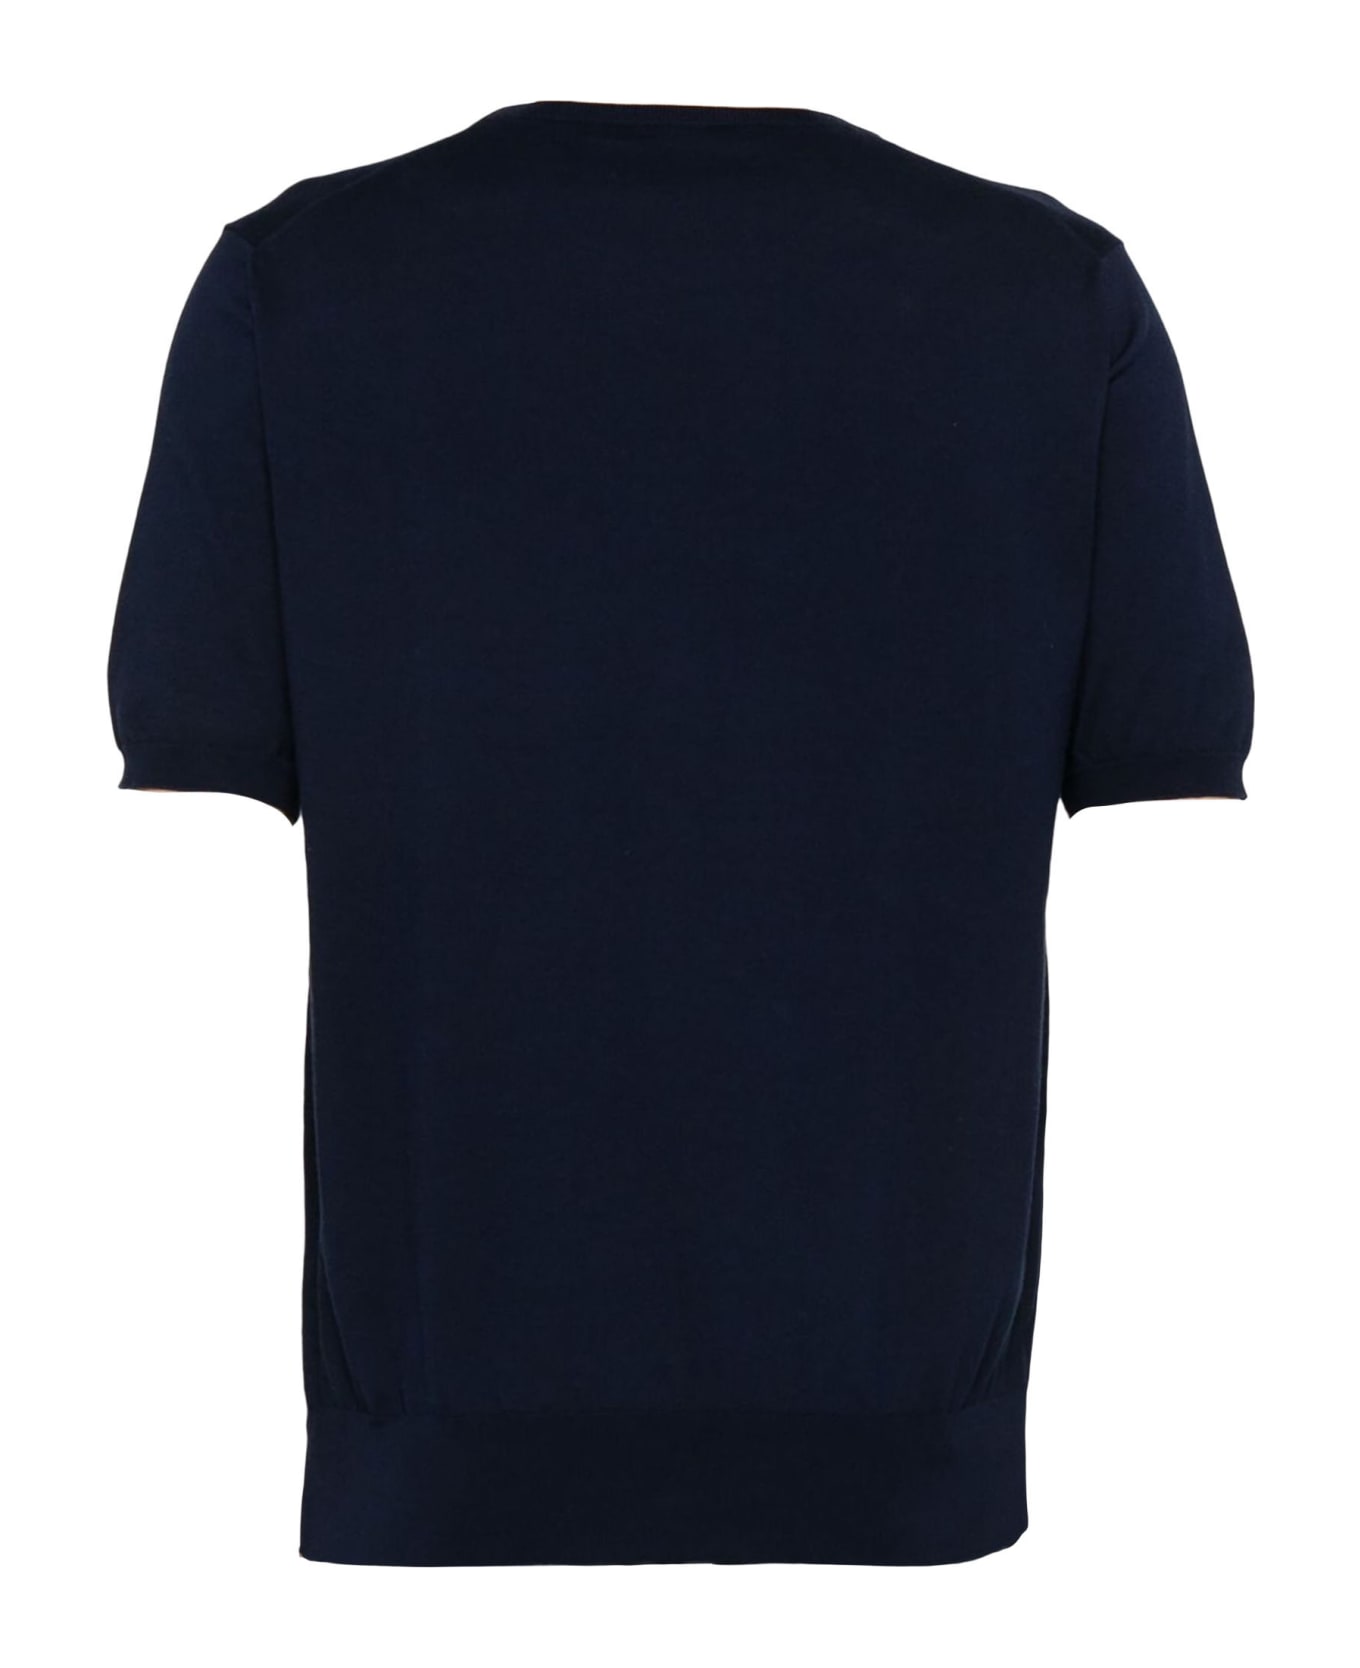 Cruciani Navy Blue Cotton T-shirt - Blue シャツ